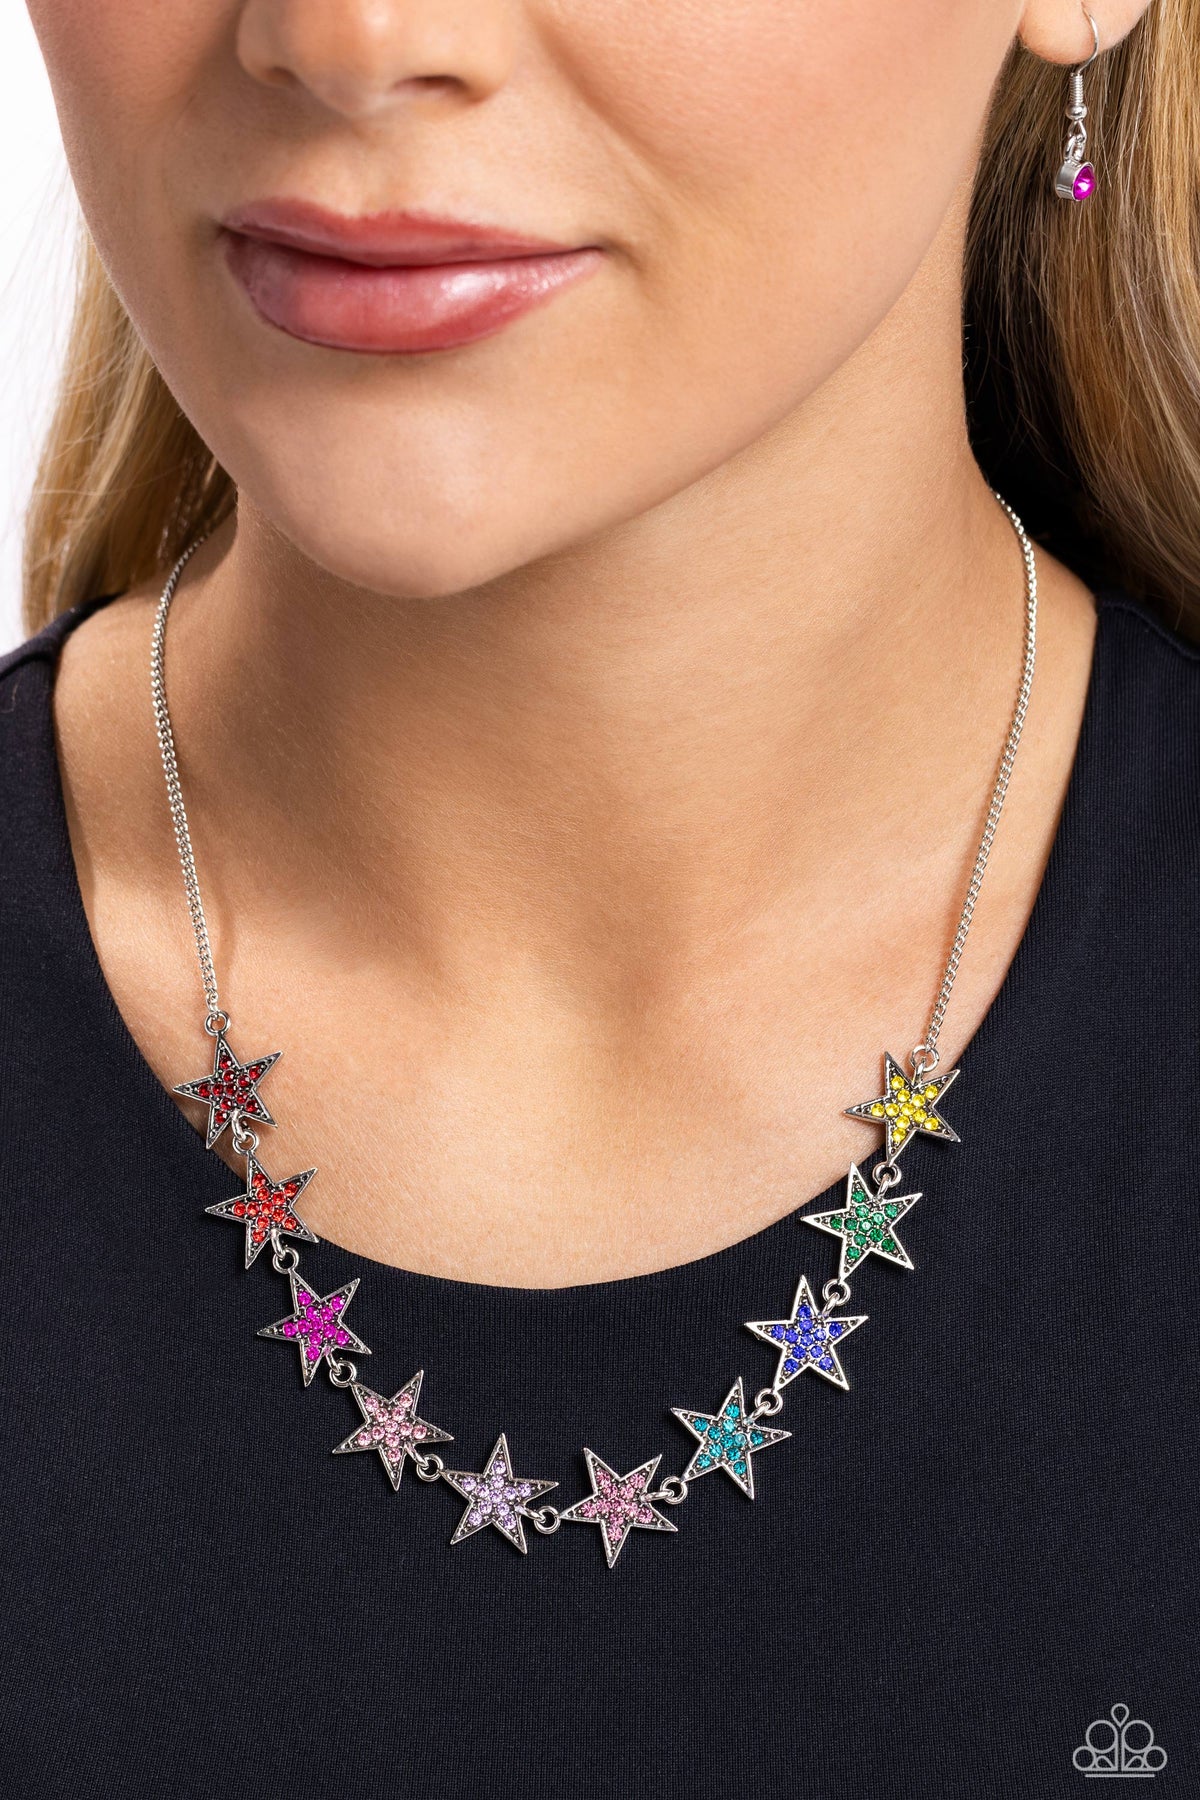 Star Quality Sensation Multi Rhinestone Necklace - Paparazzi Accessories-on model - CarasShop.com - $5 Jewelry by Cara Jewels